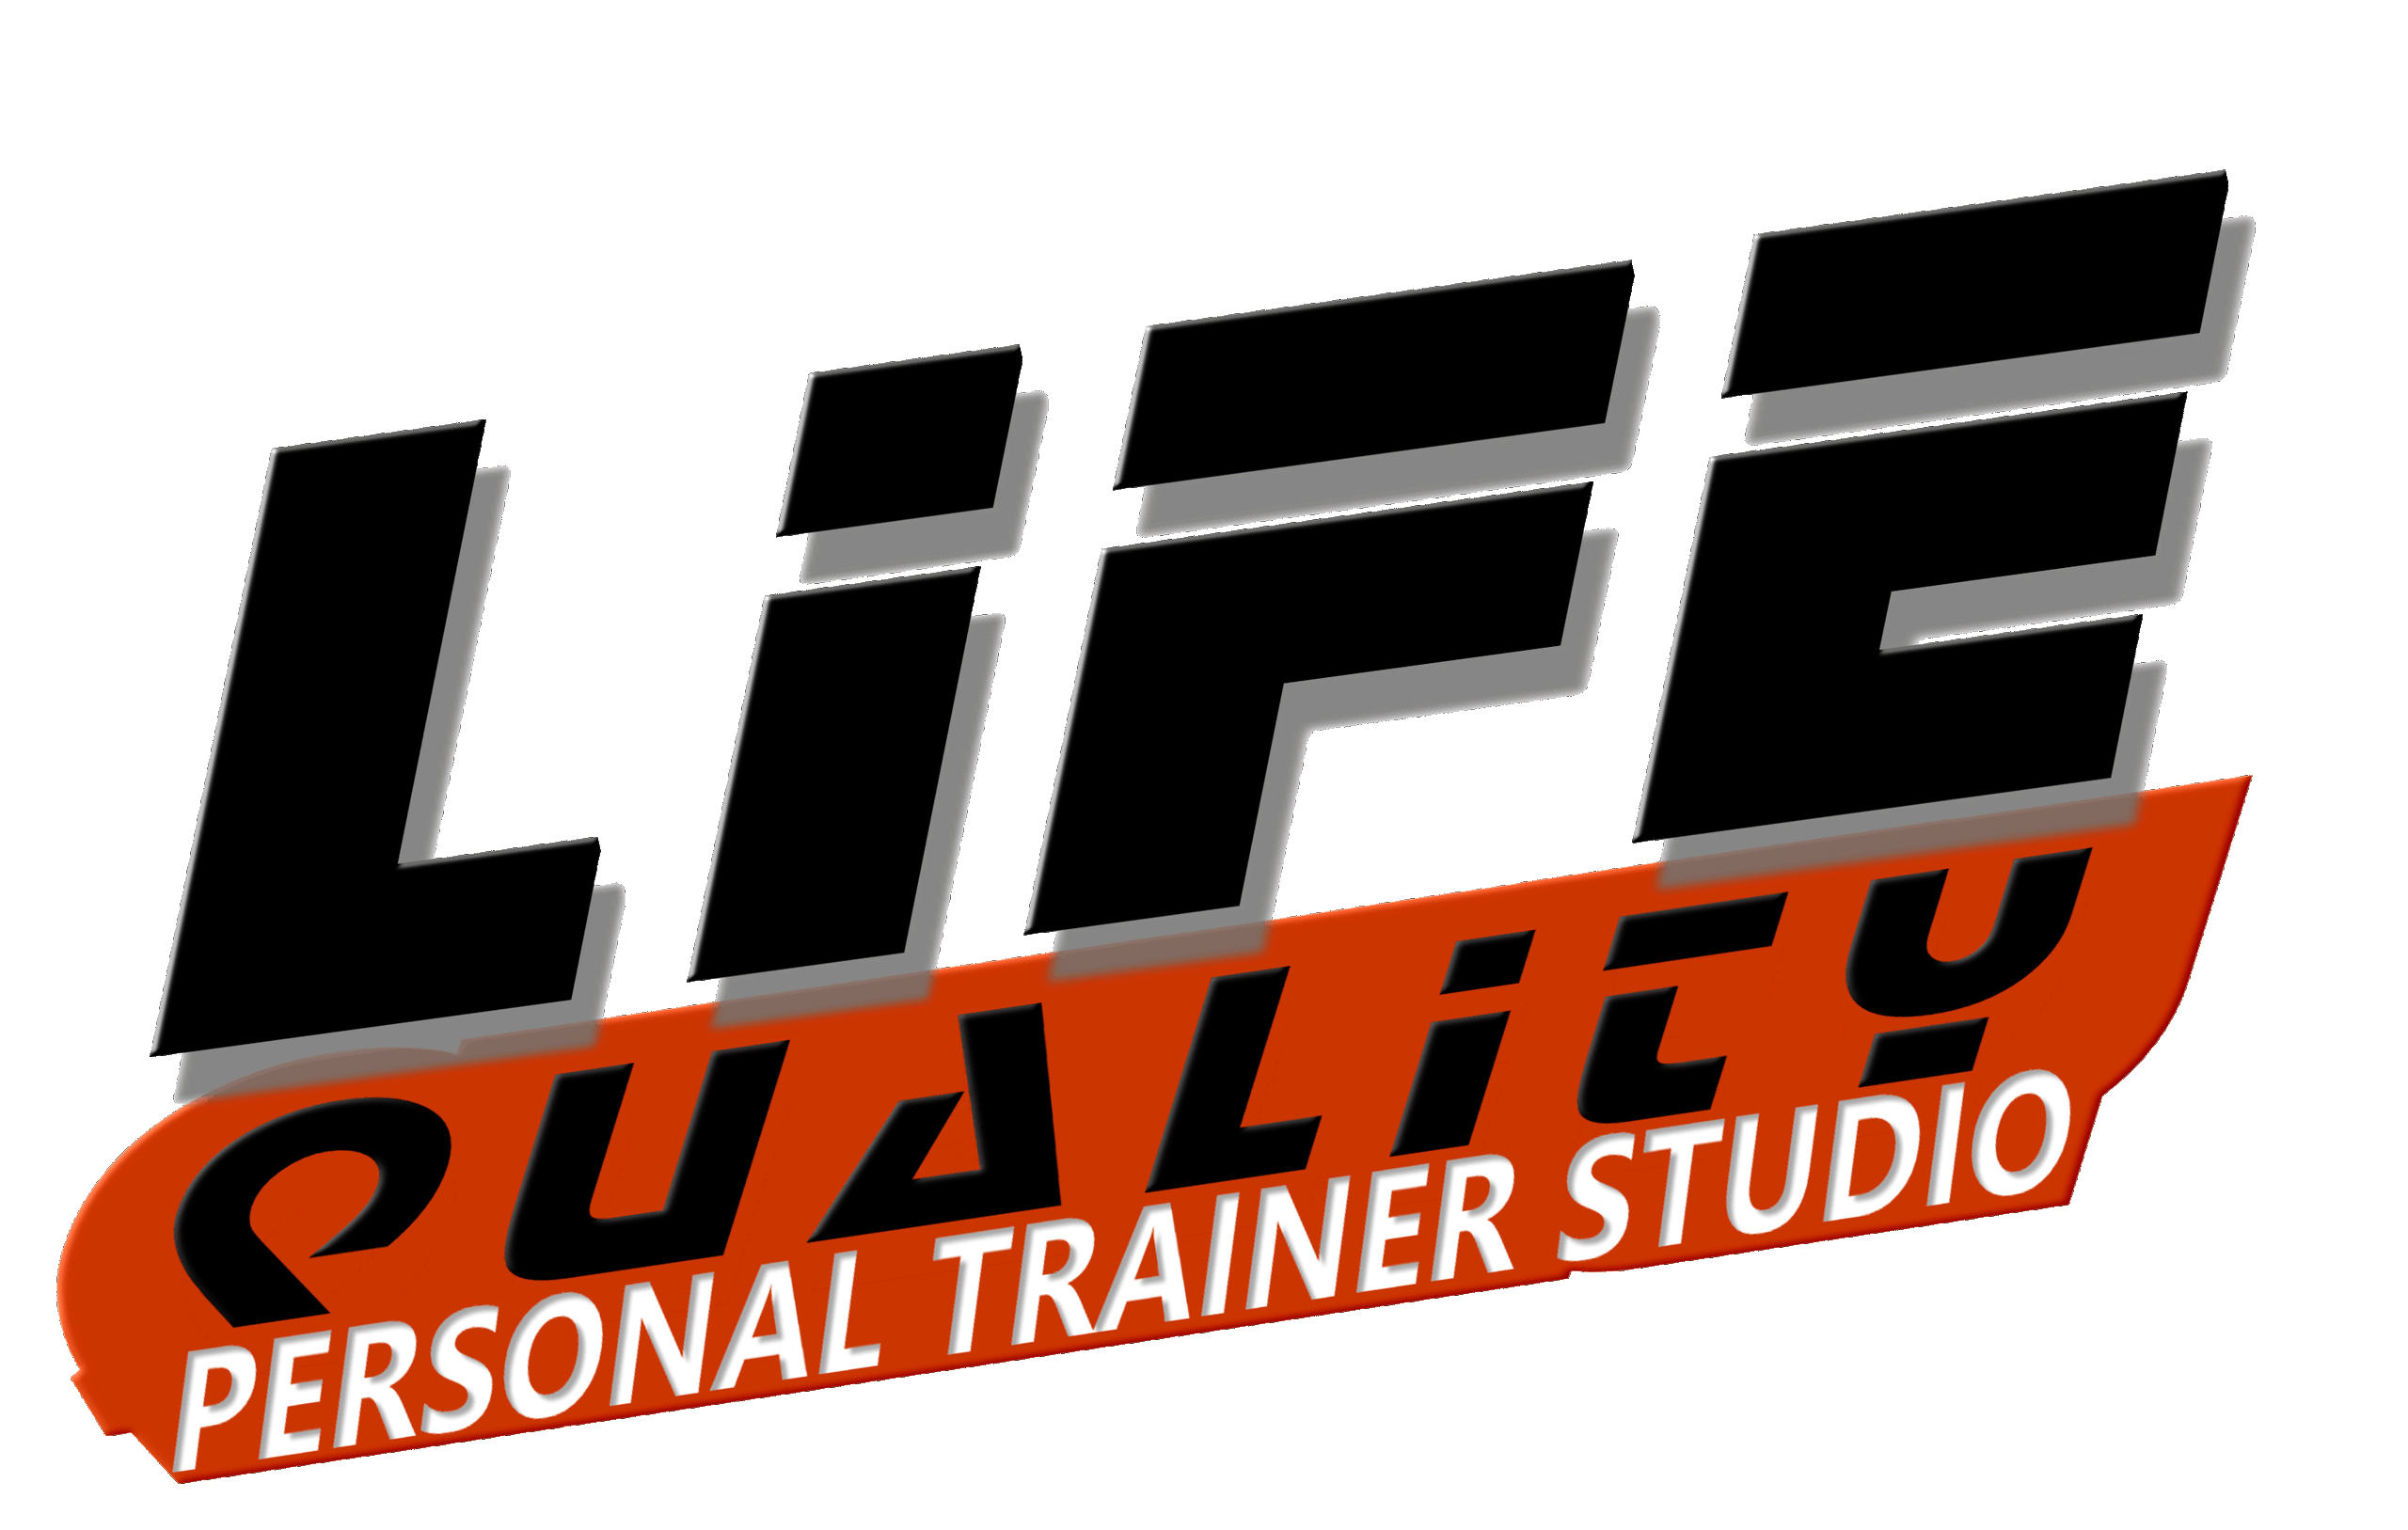 Life Quality Personal Trainer Studio